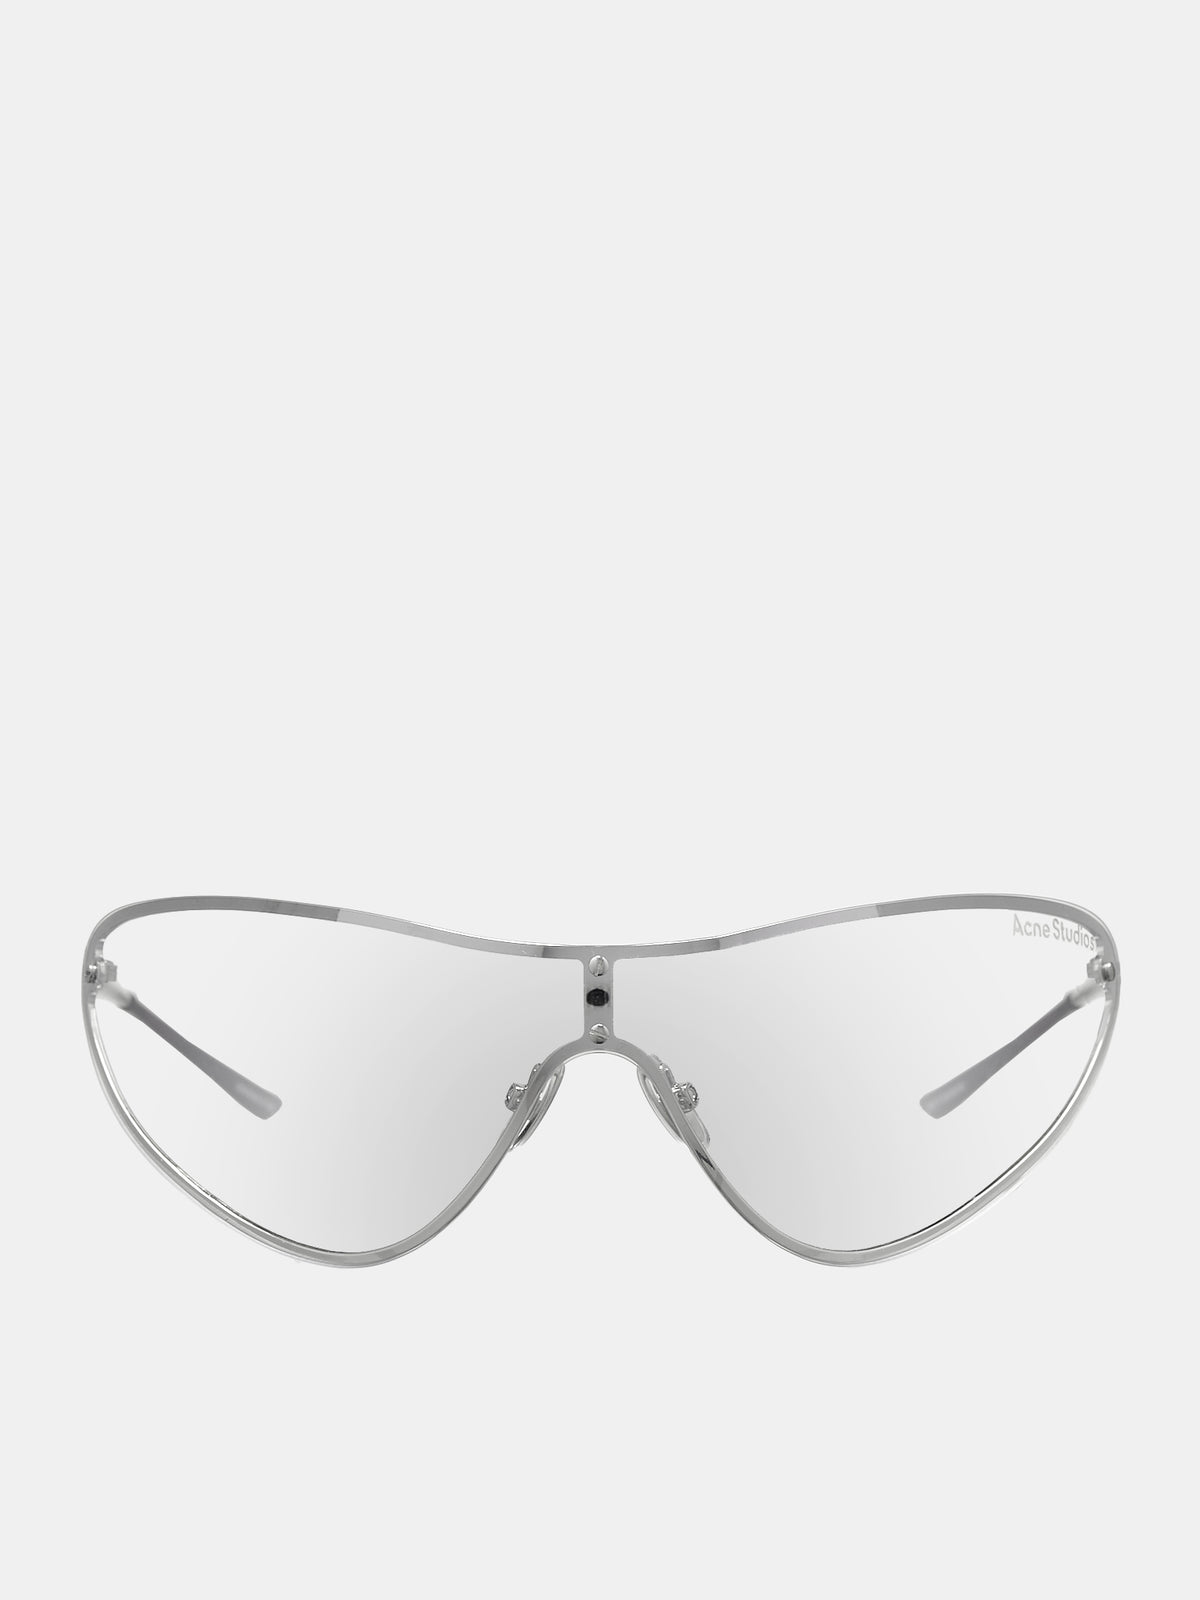 ACNE STUDIOS Frame Sunglasses | H.Lorenzo - front